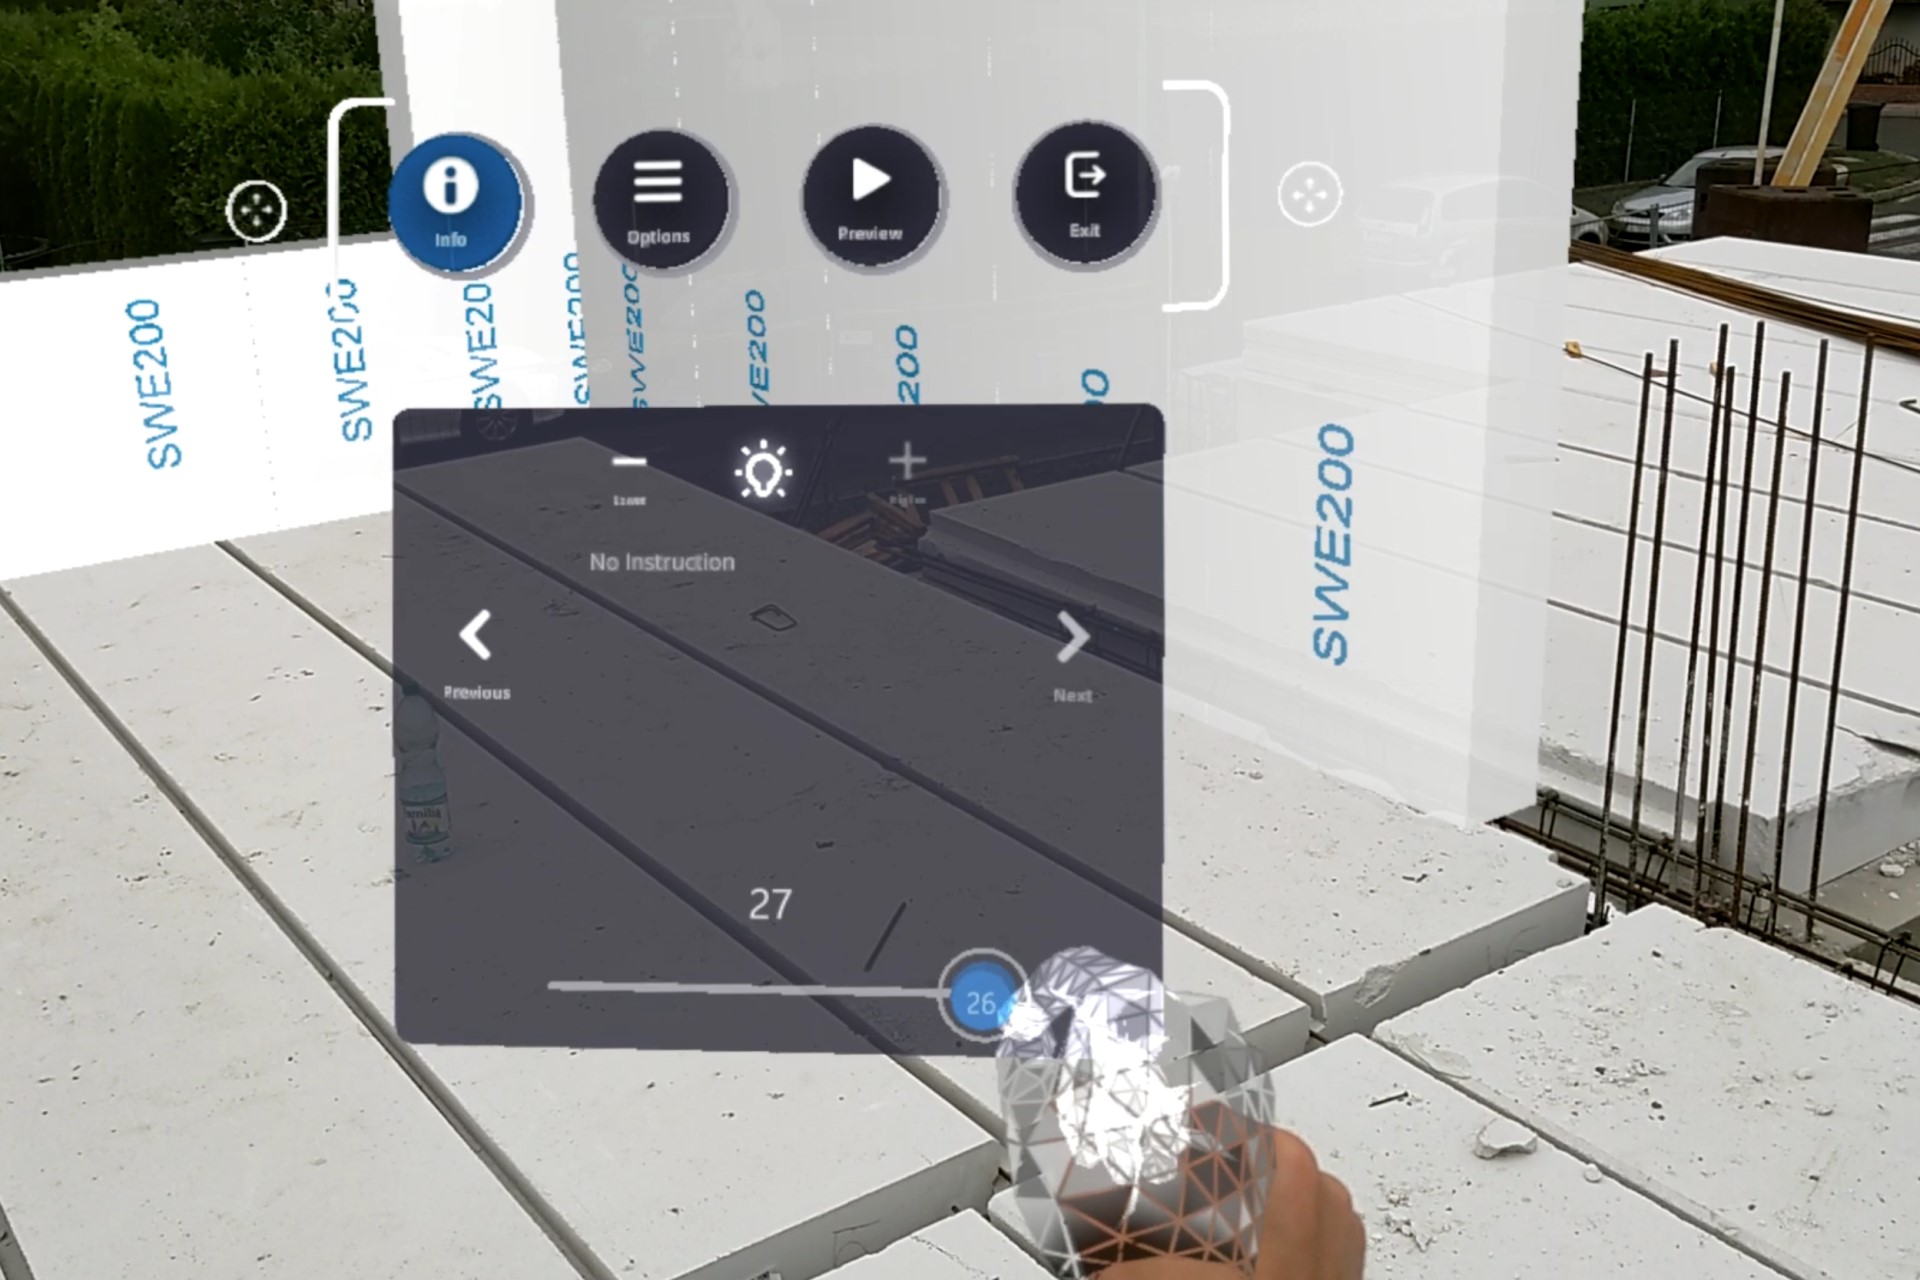 Widok w okularach HoloLens - budowa Xella Ytong - wirtualny model 3d domu